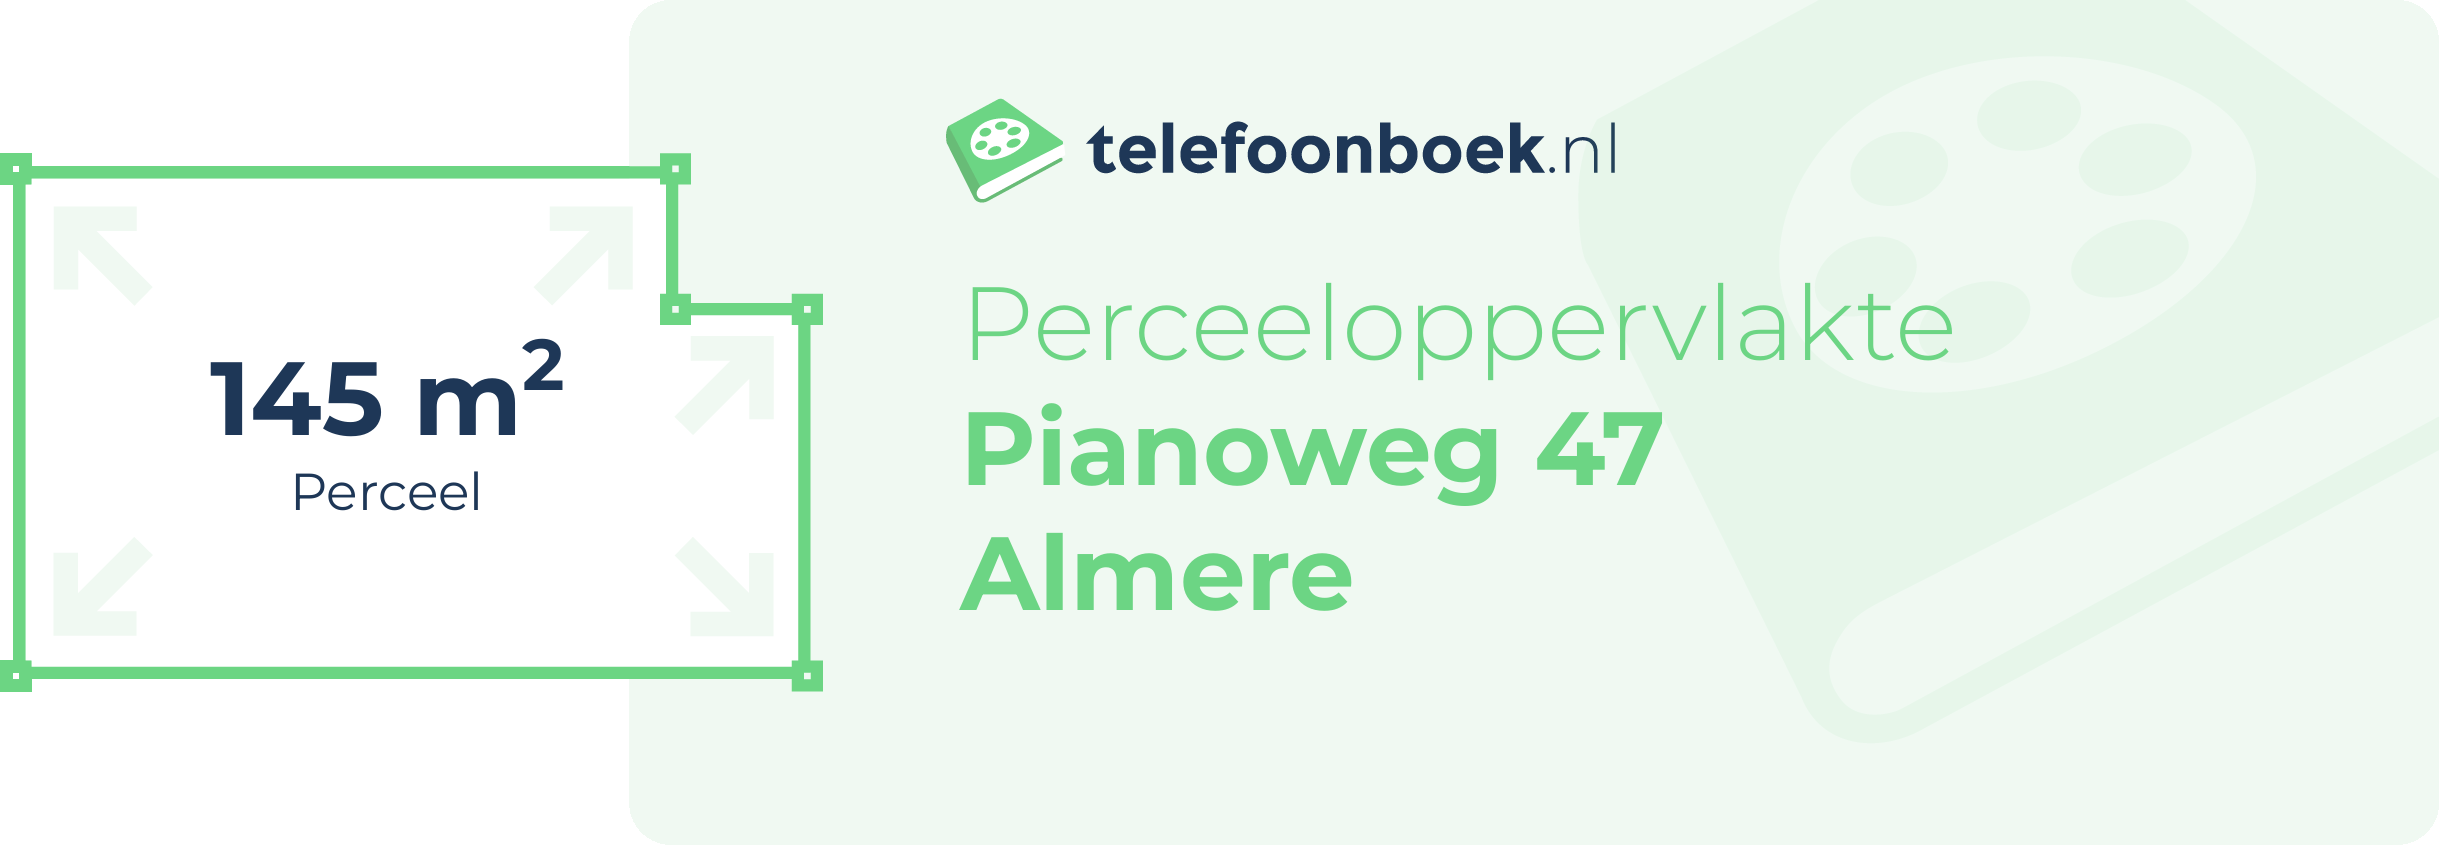 Perceeloppervlakte Pianoweg 47 Almere